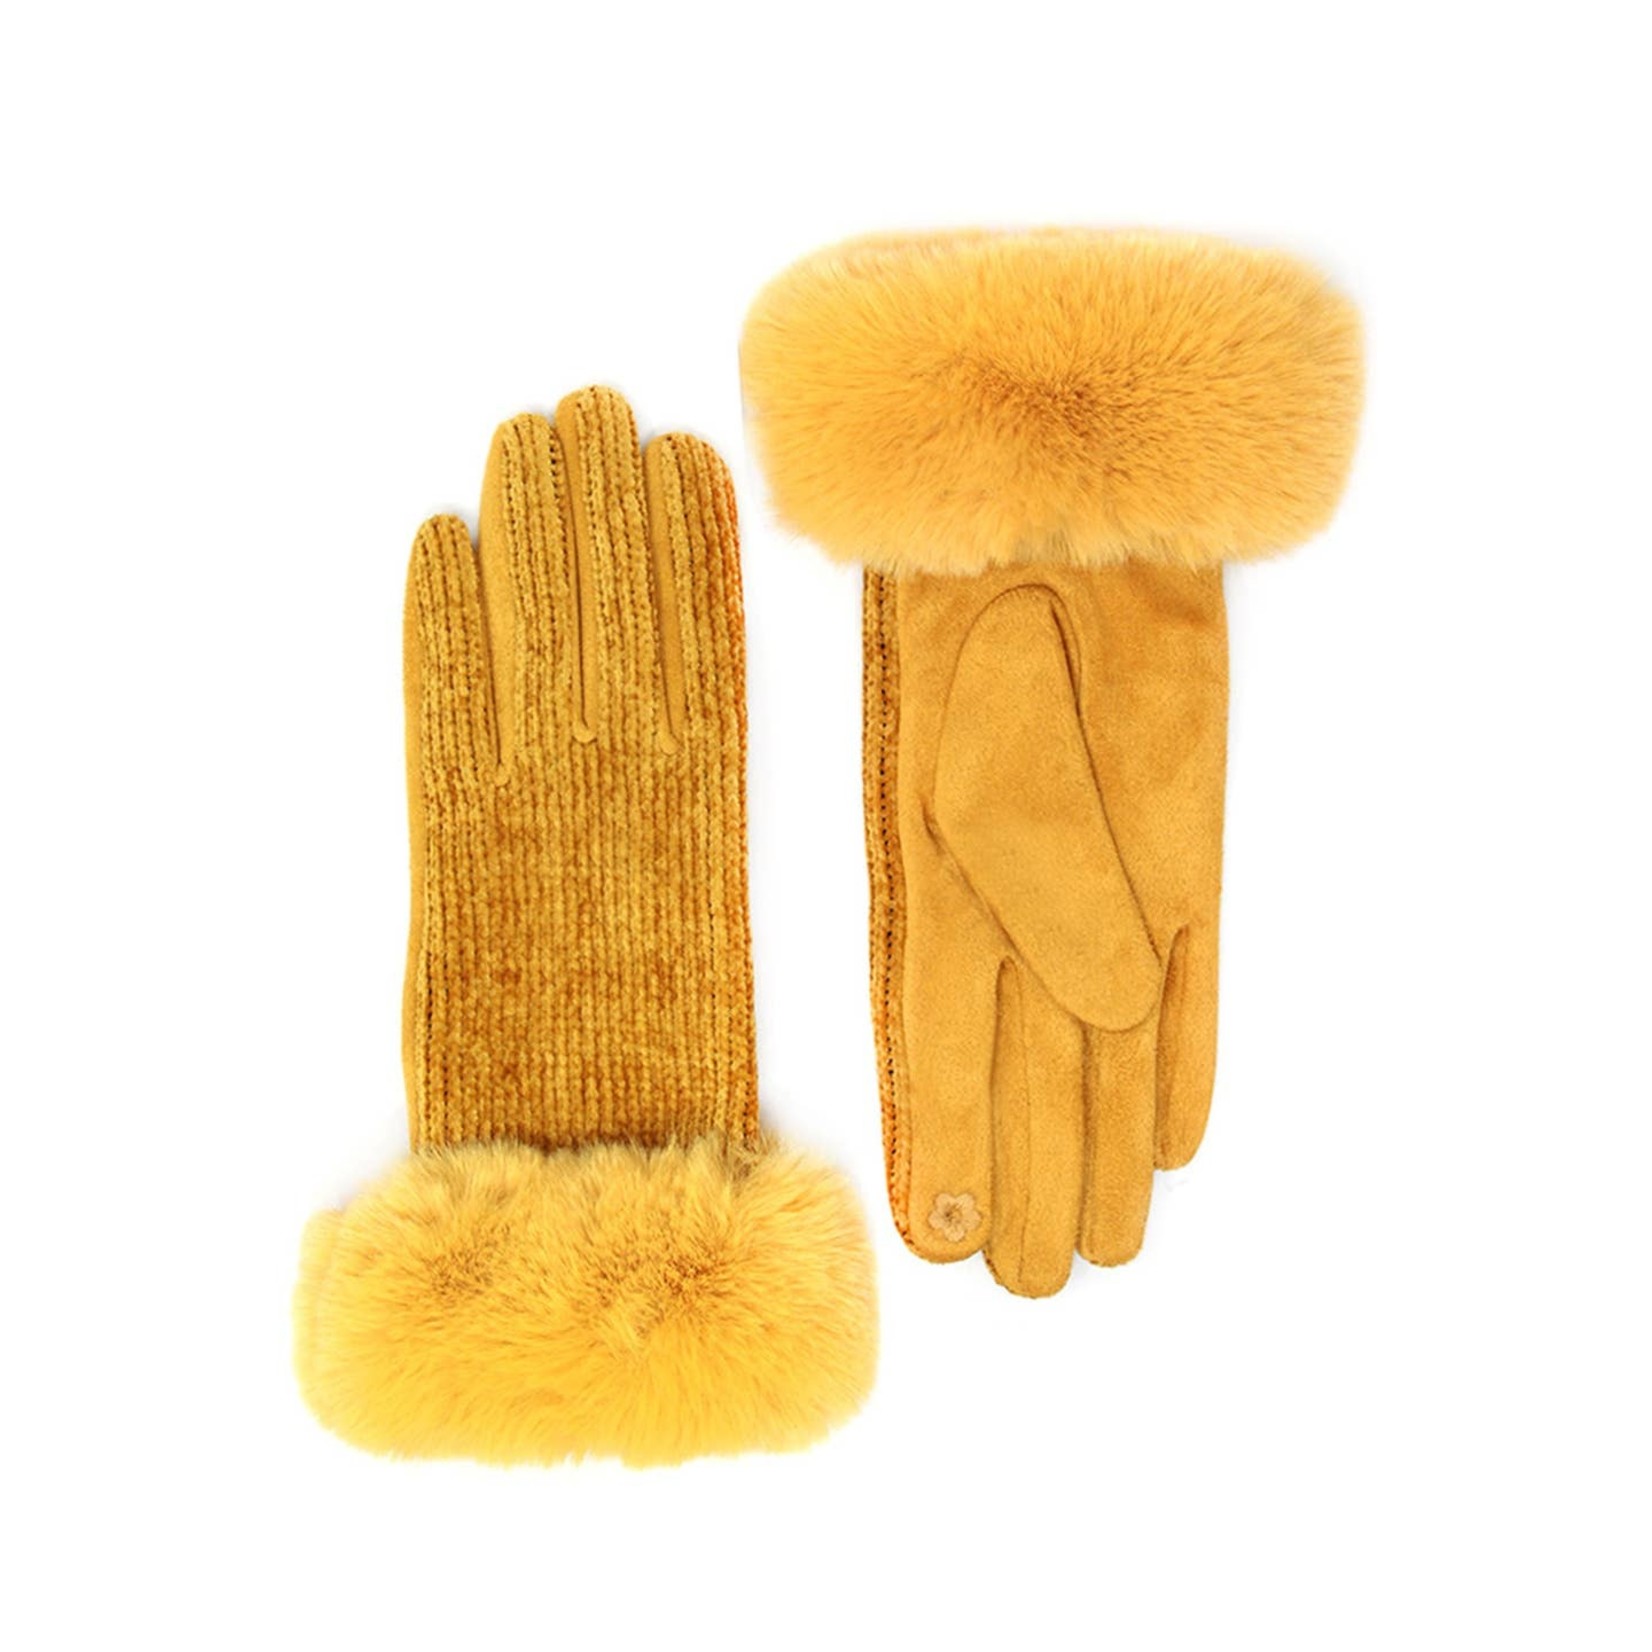 Faux Fur Cuff & Chenille Gloves in Mustard